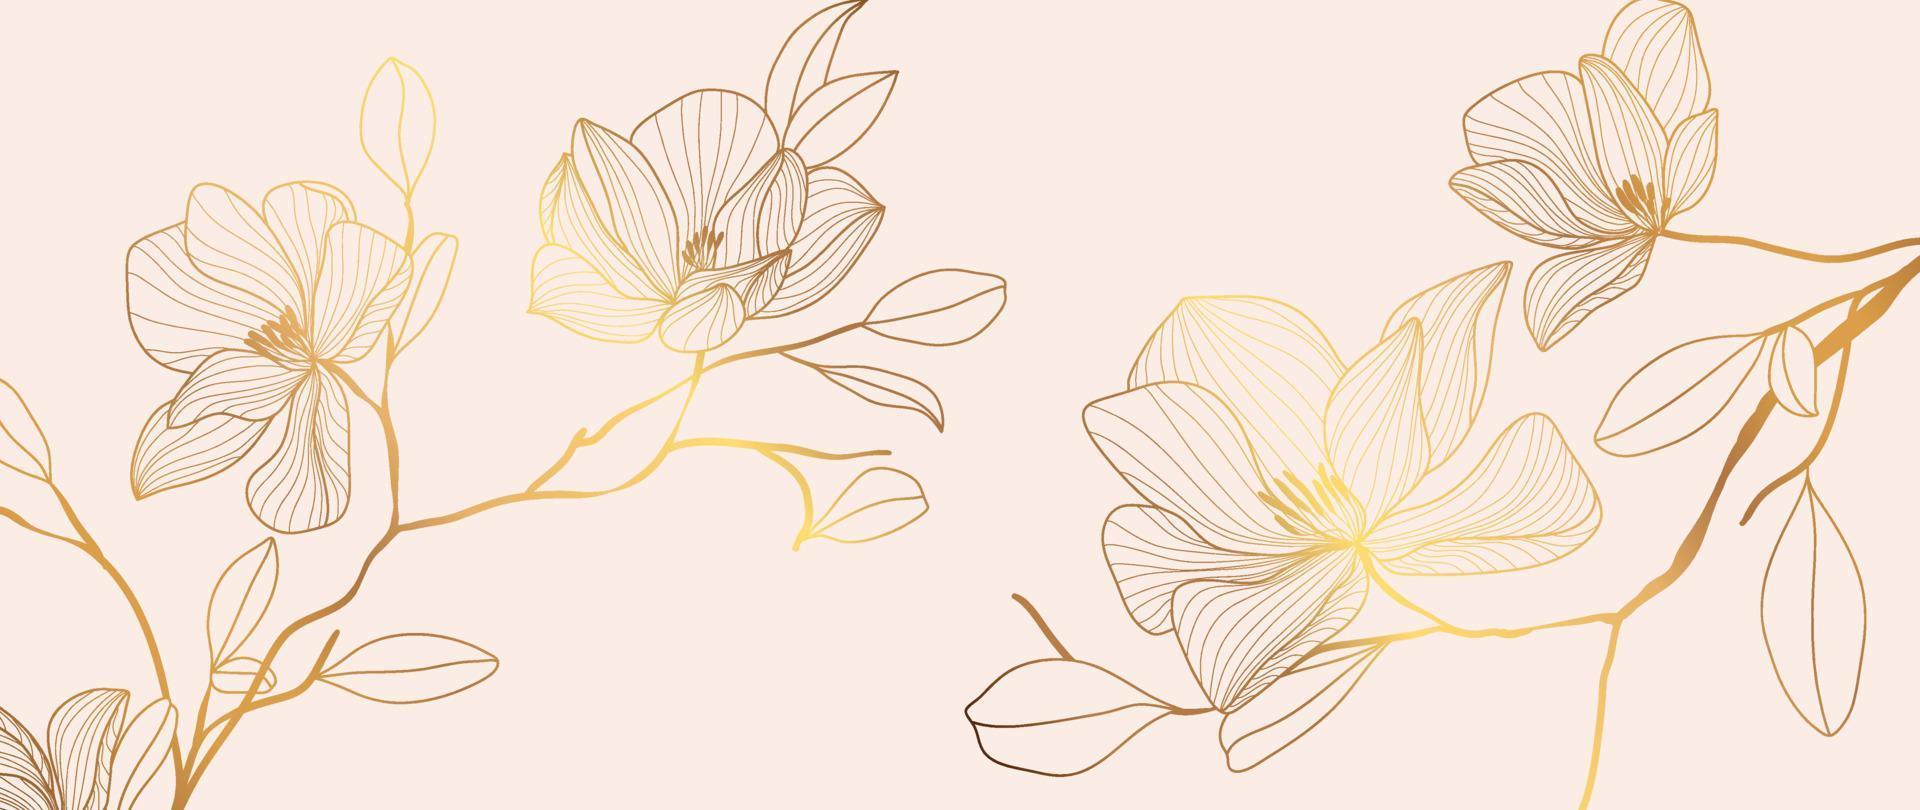 Luxury floral golden line art wallpaper. Elegant gradient gold magnolia flowers pattern background. Design illustration for decorative, card, home decor, invitation, packaging, print, cover, banner. vector